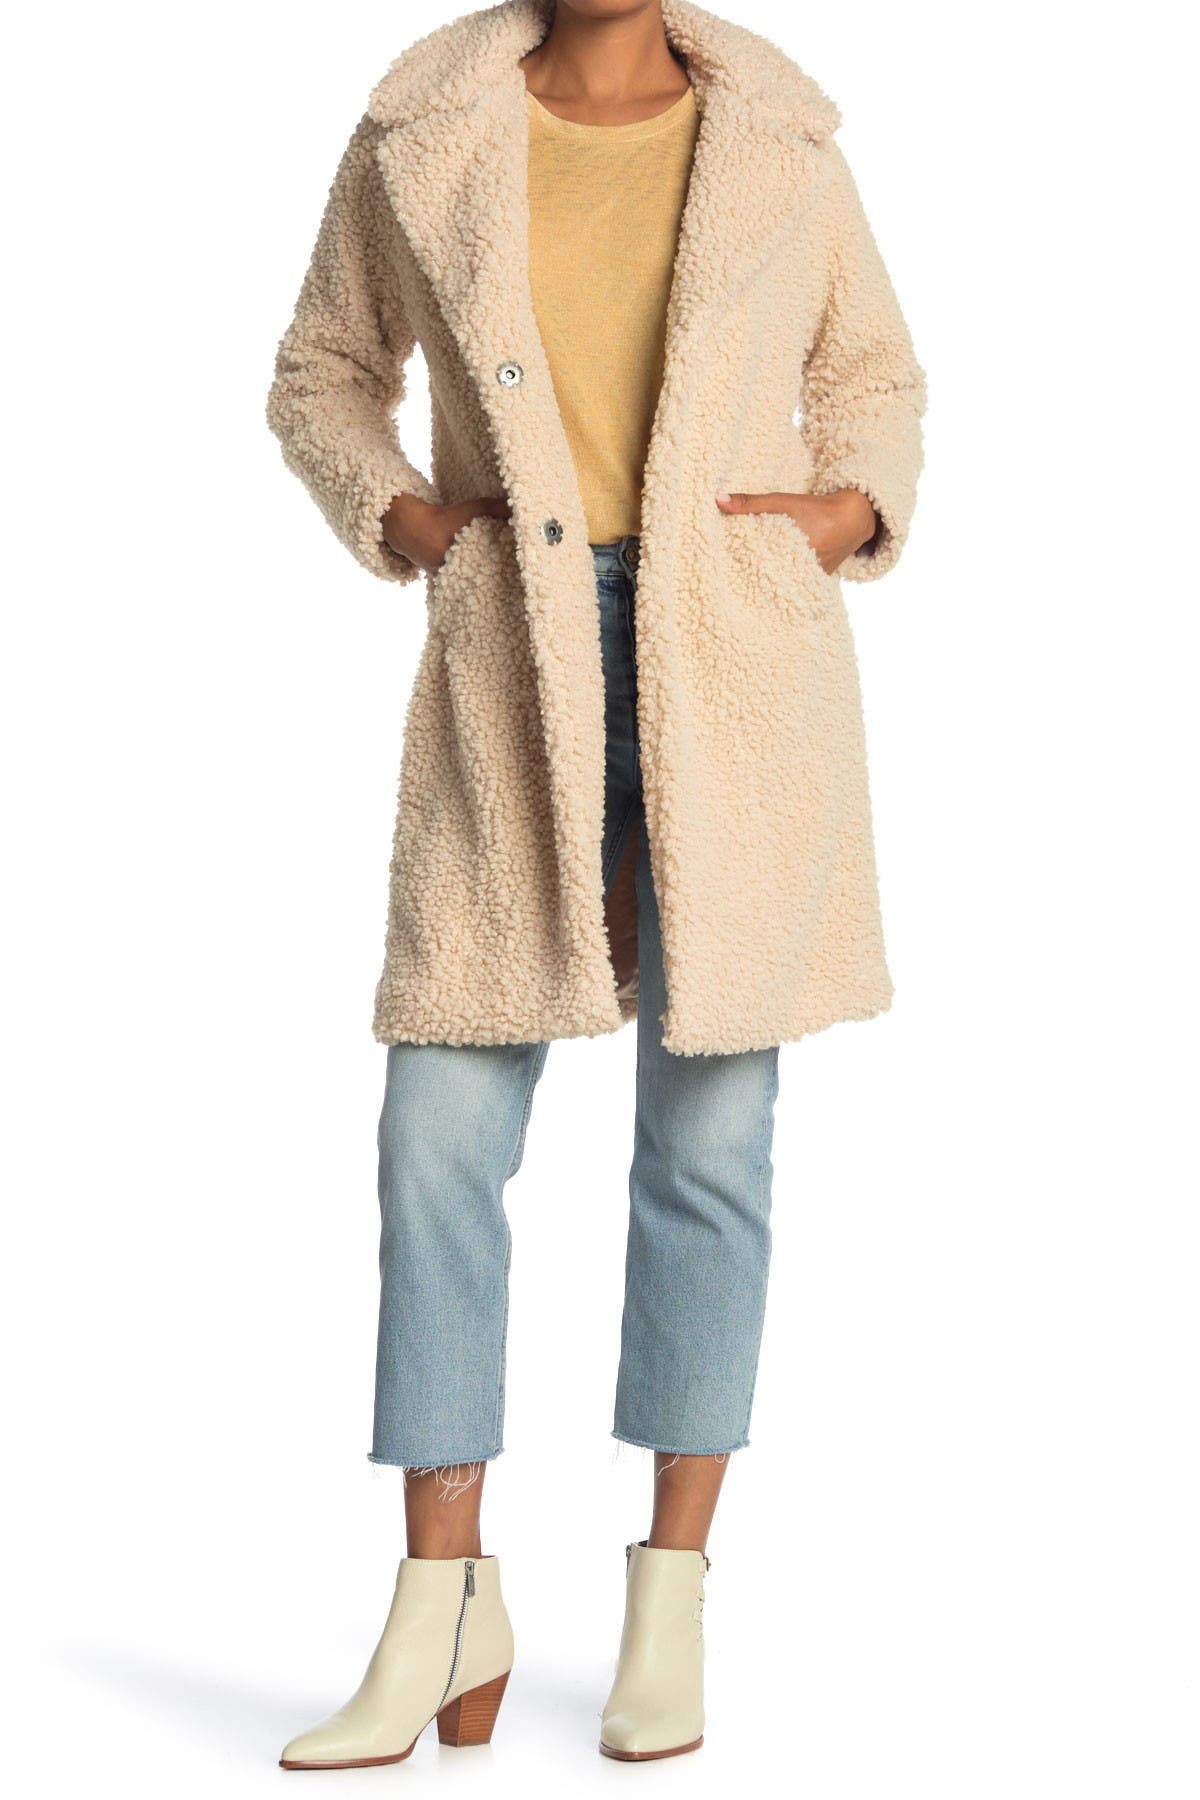 Buy > fur dress coat > in stock